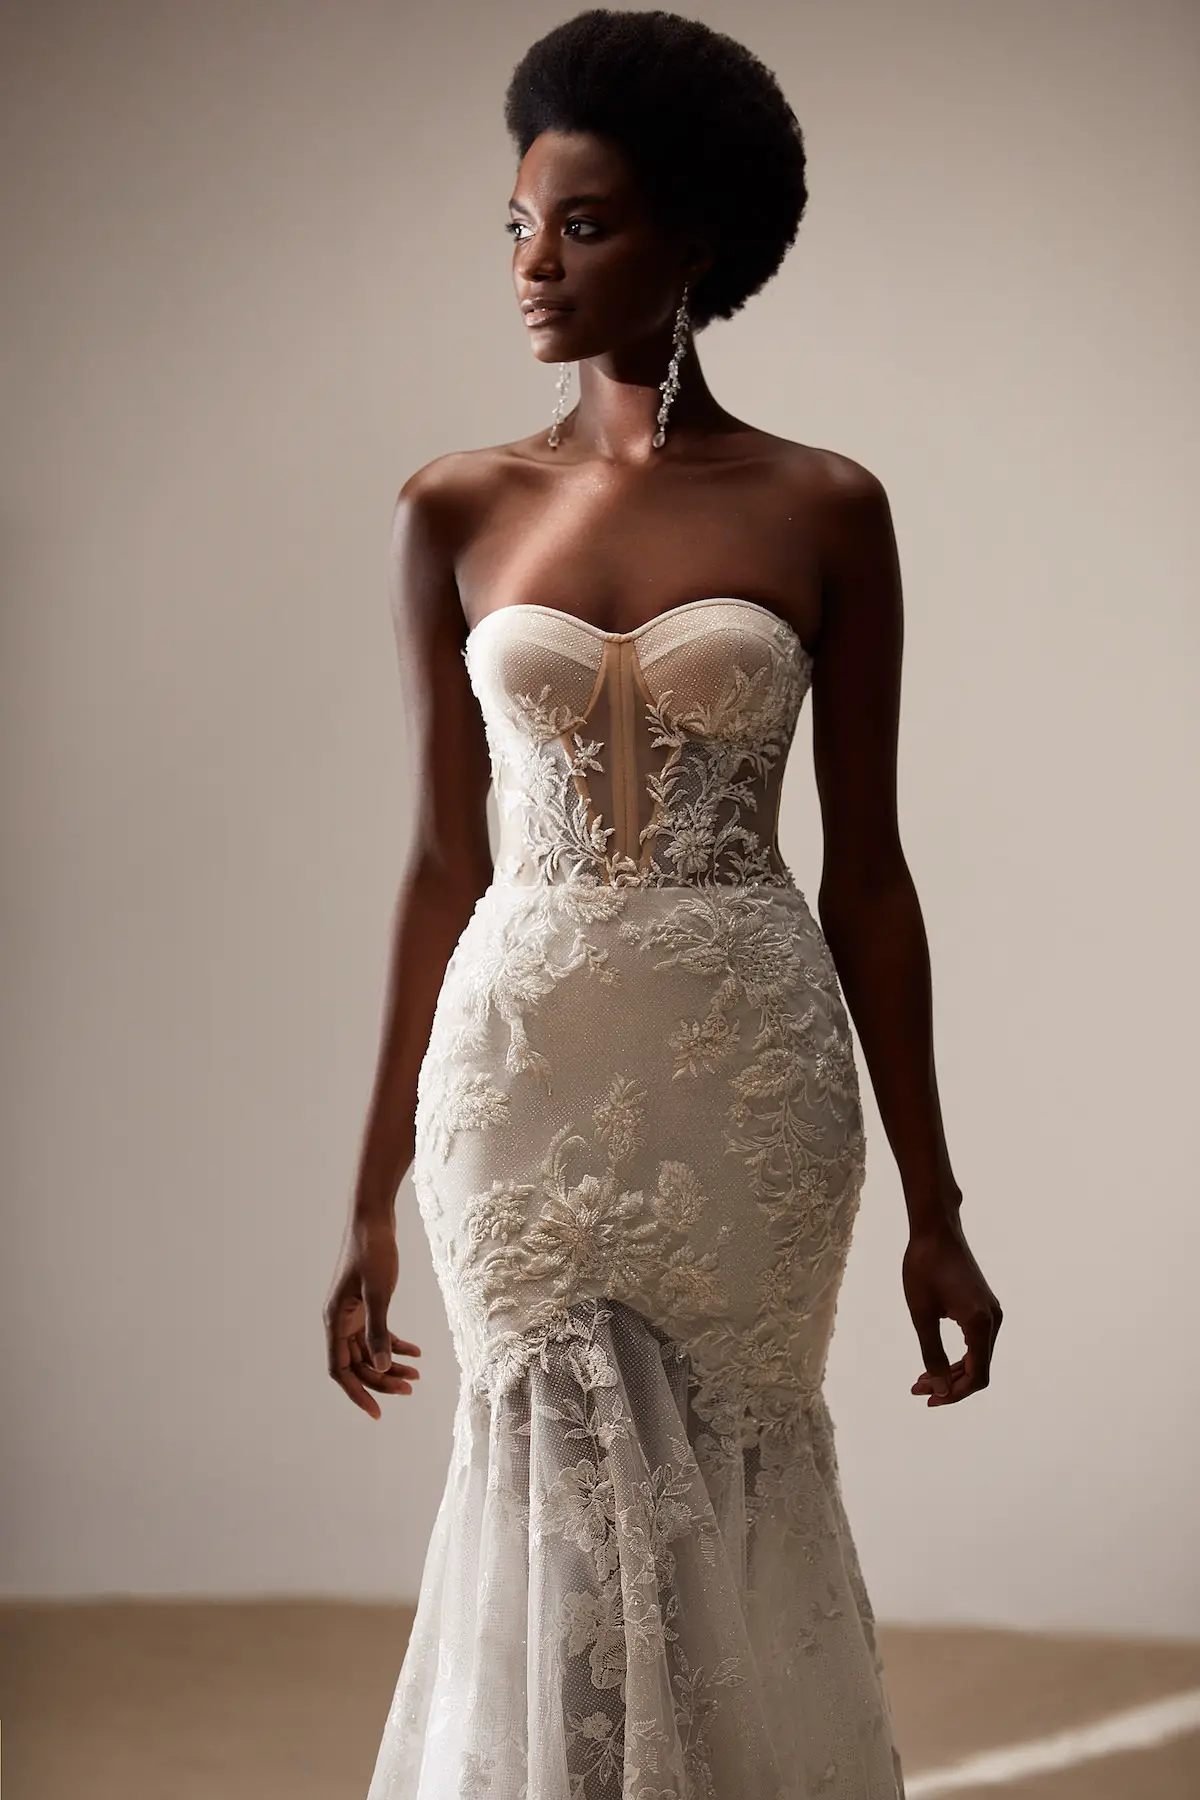 Corset Wedding Dress by Milla Nova - Alla white lace